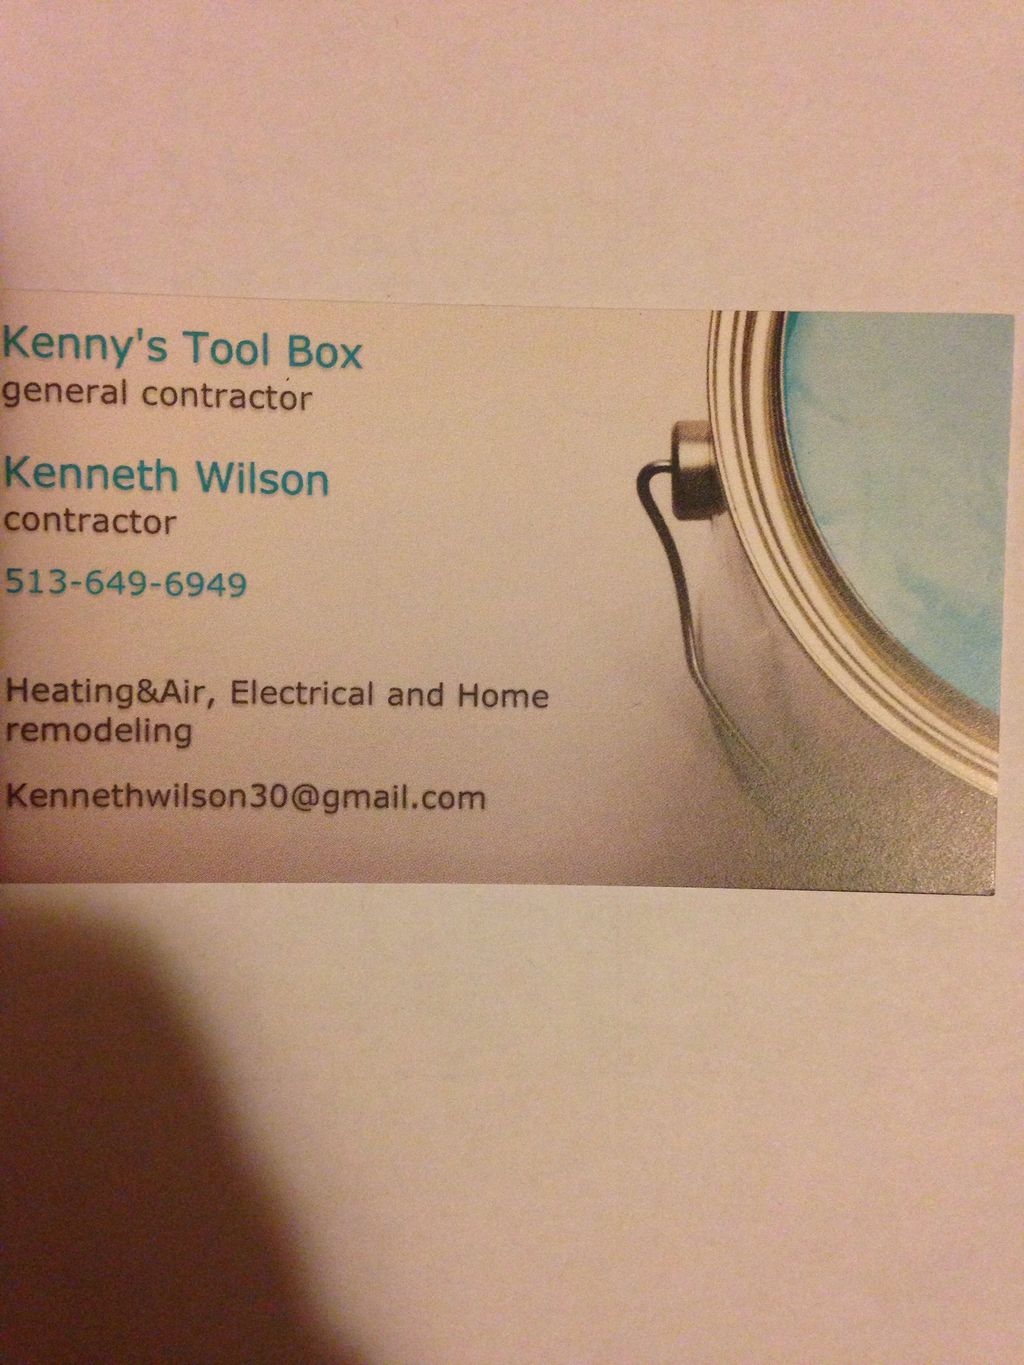 Kenneth's Tool Box